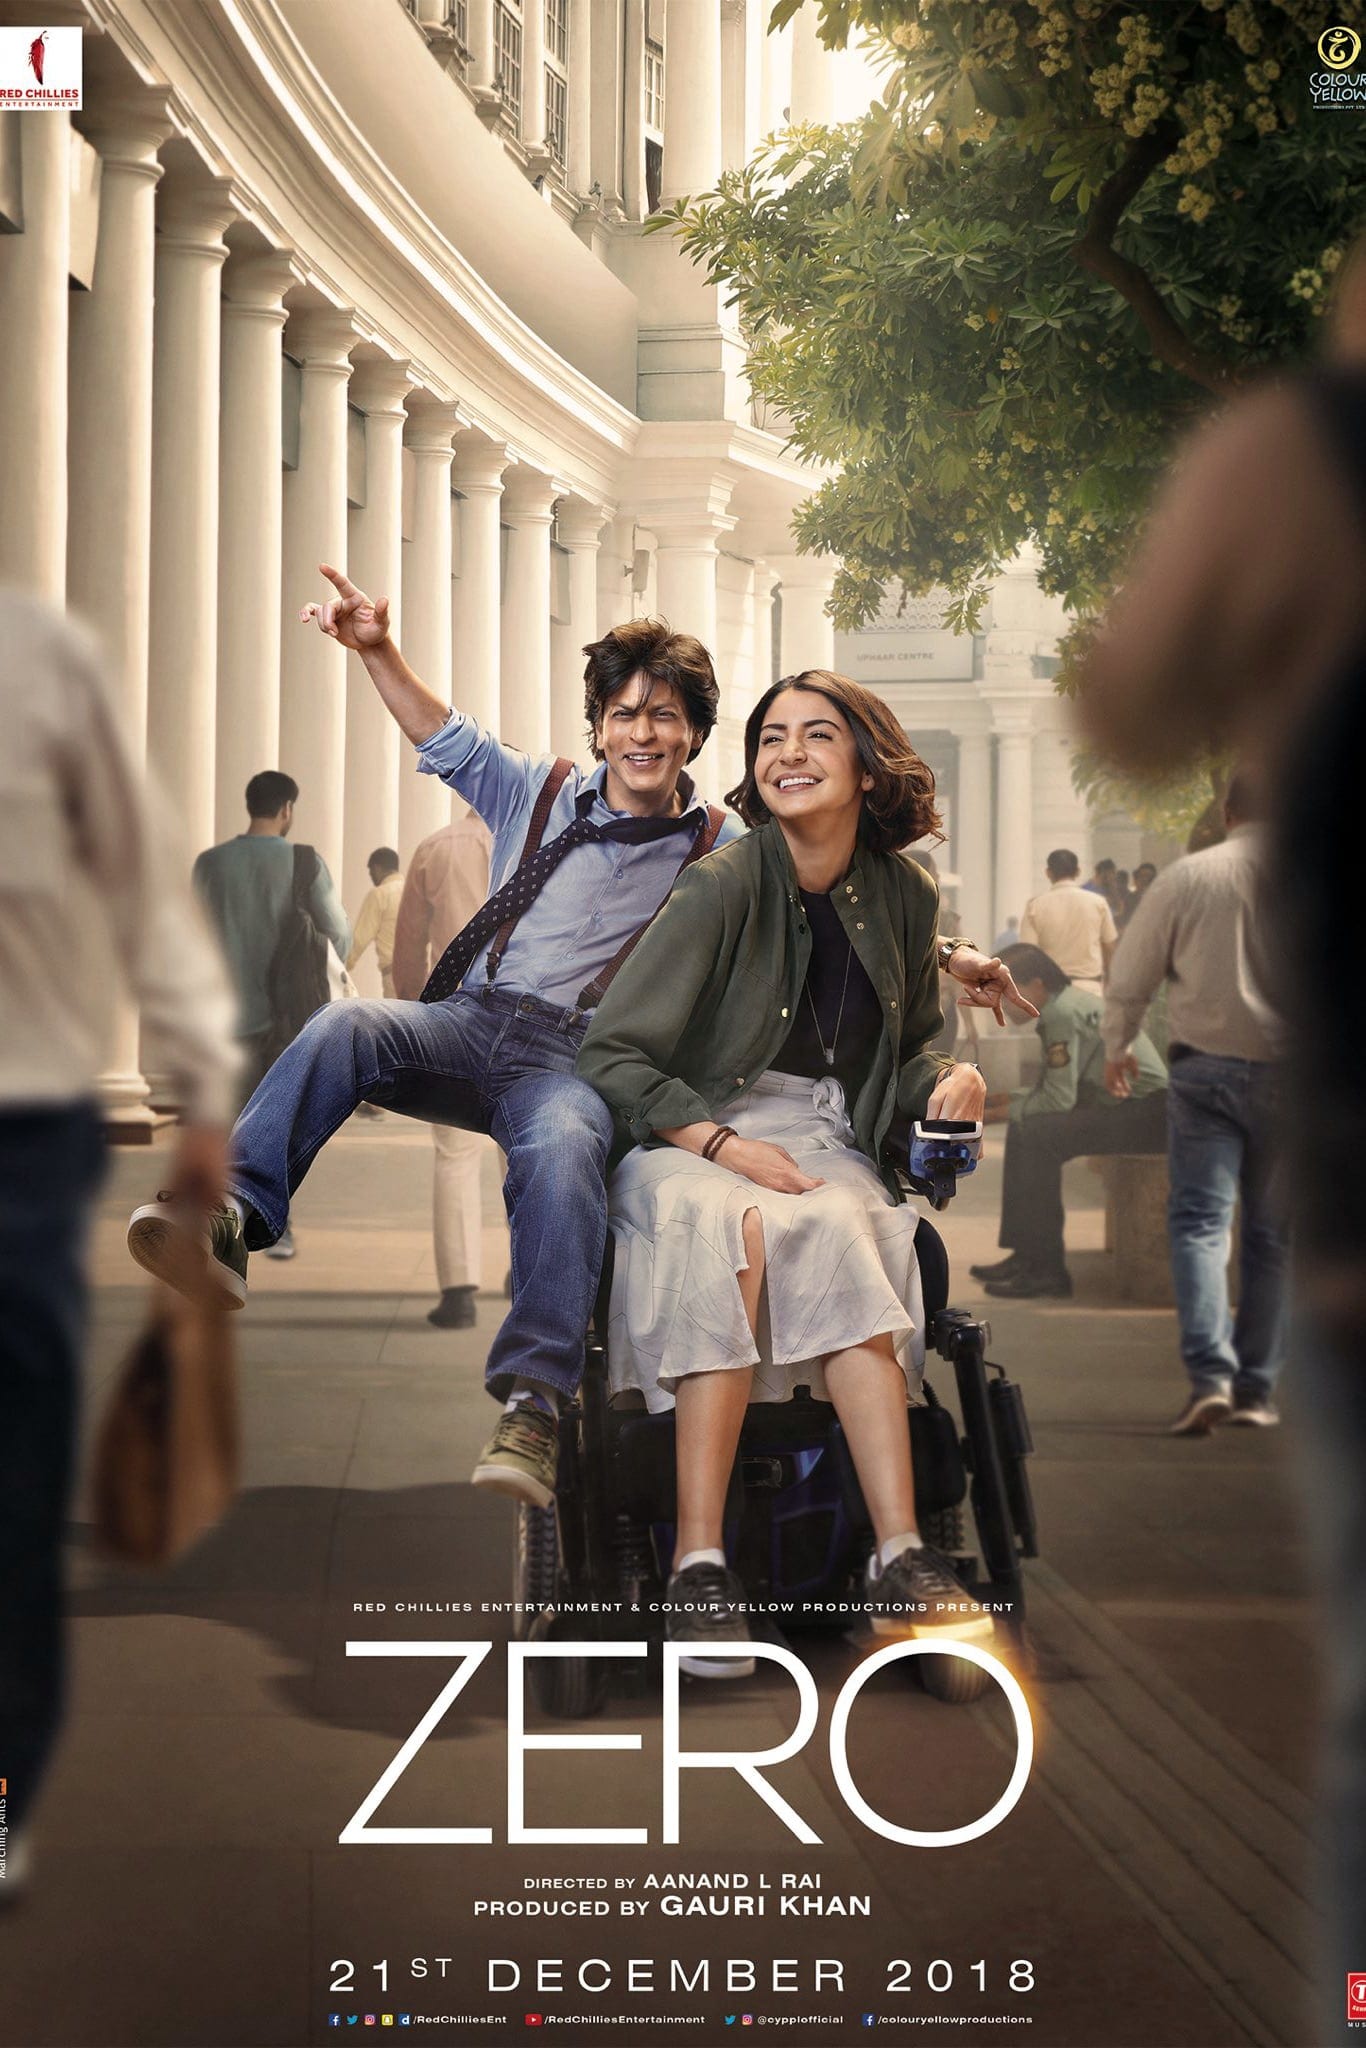 Poster for the movie "Zero"